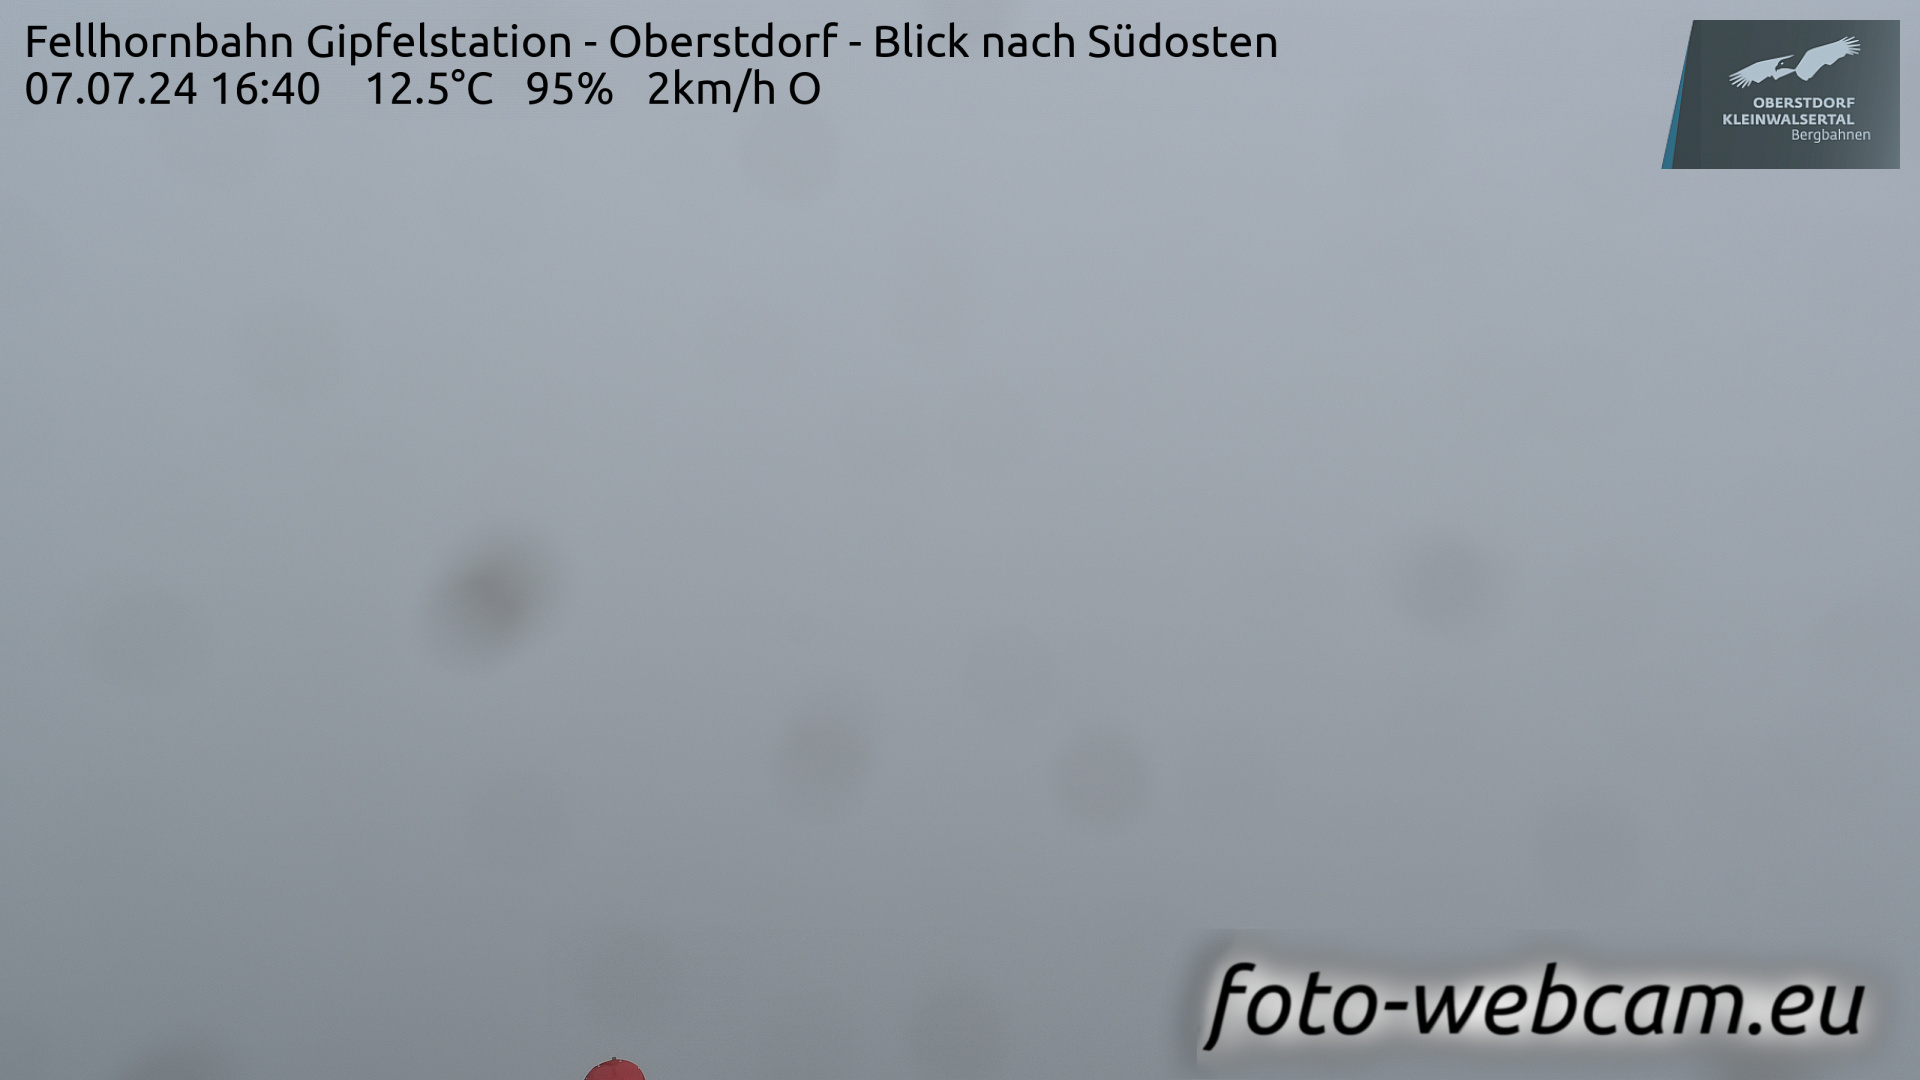 Oberstdorf Wed. 16:49